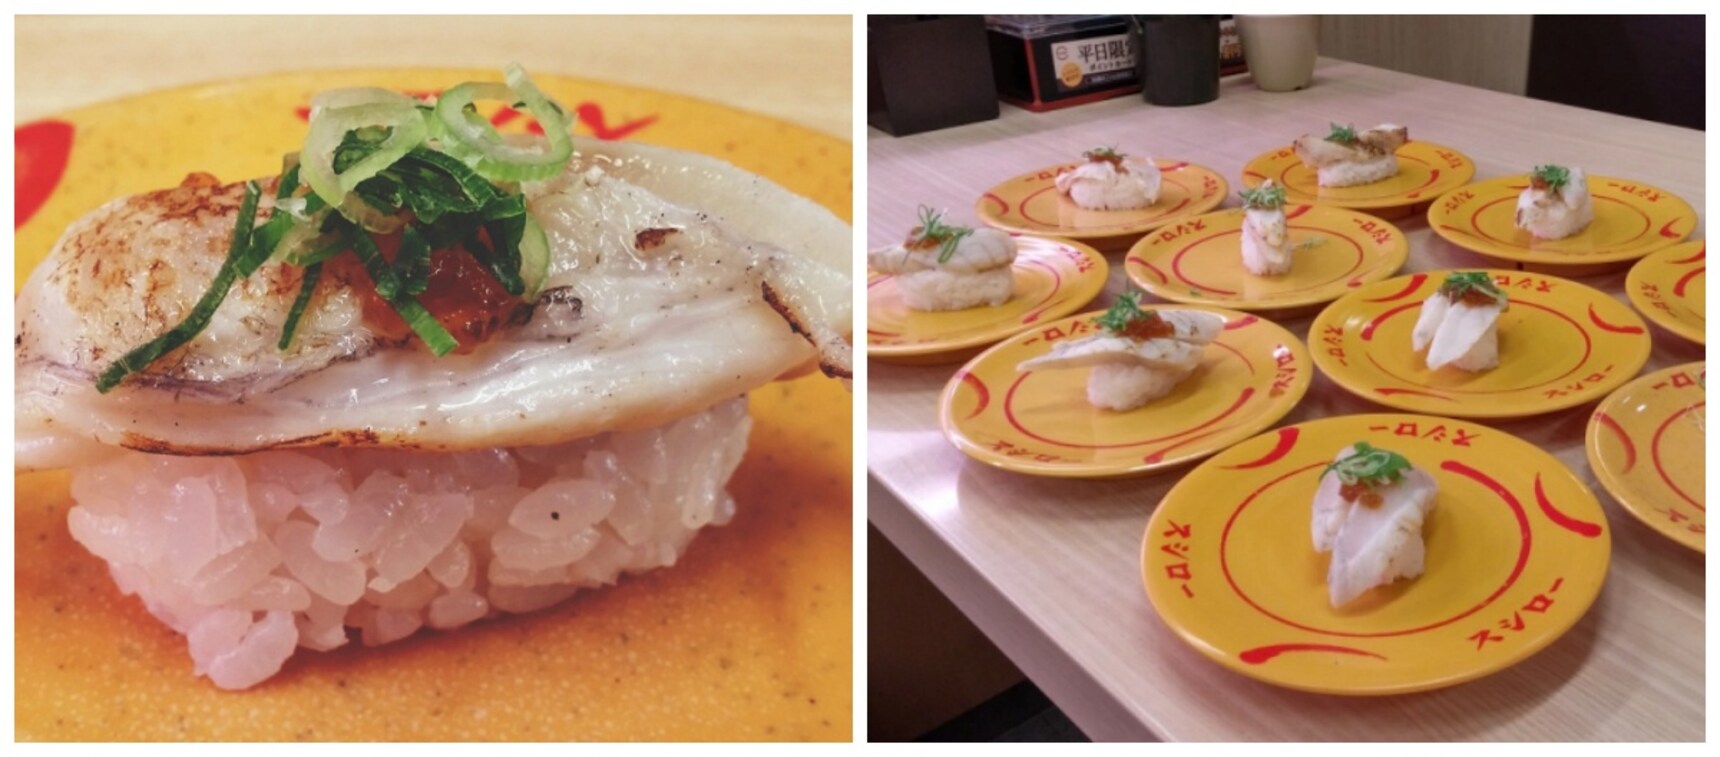 Feast on Fugu at Conveyor Belt Sushi Chains